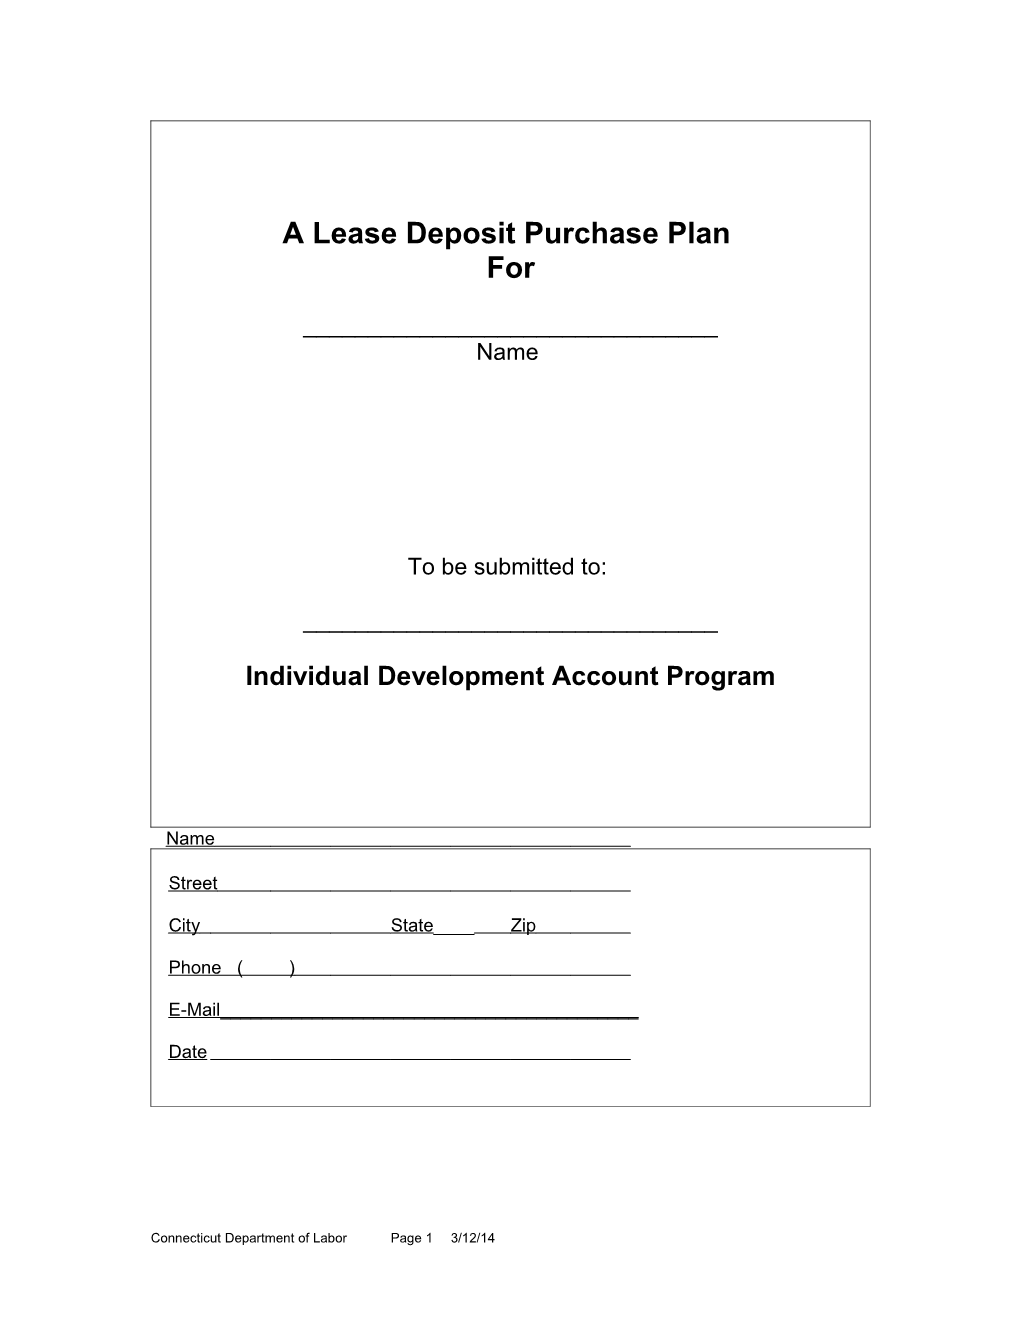 Individual Development Account Program